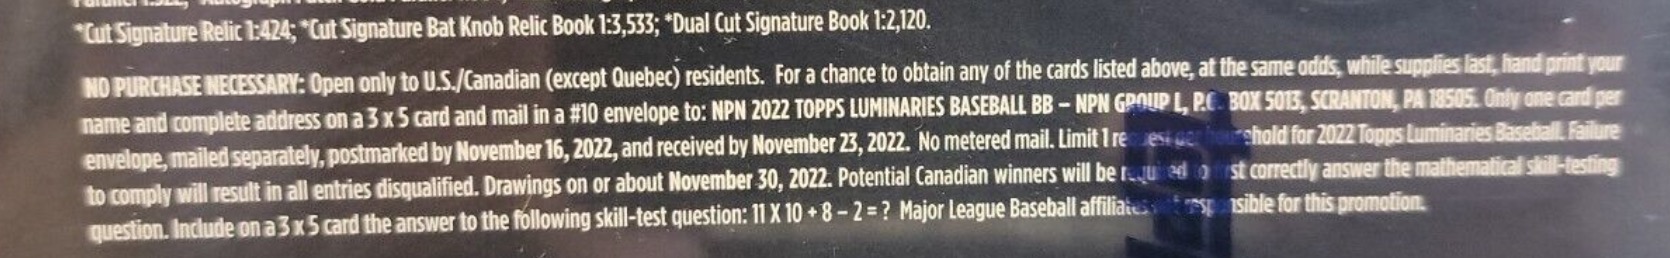 2022 Topps Luminaries Baseball Cards - Hobby Box - No Purchase Necessary (NPN) Information